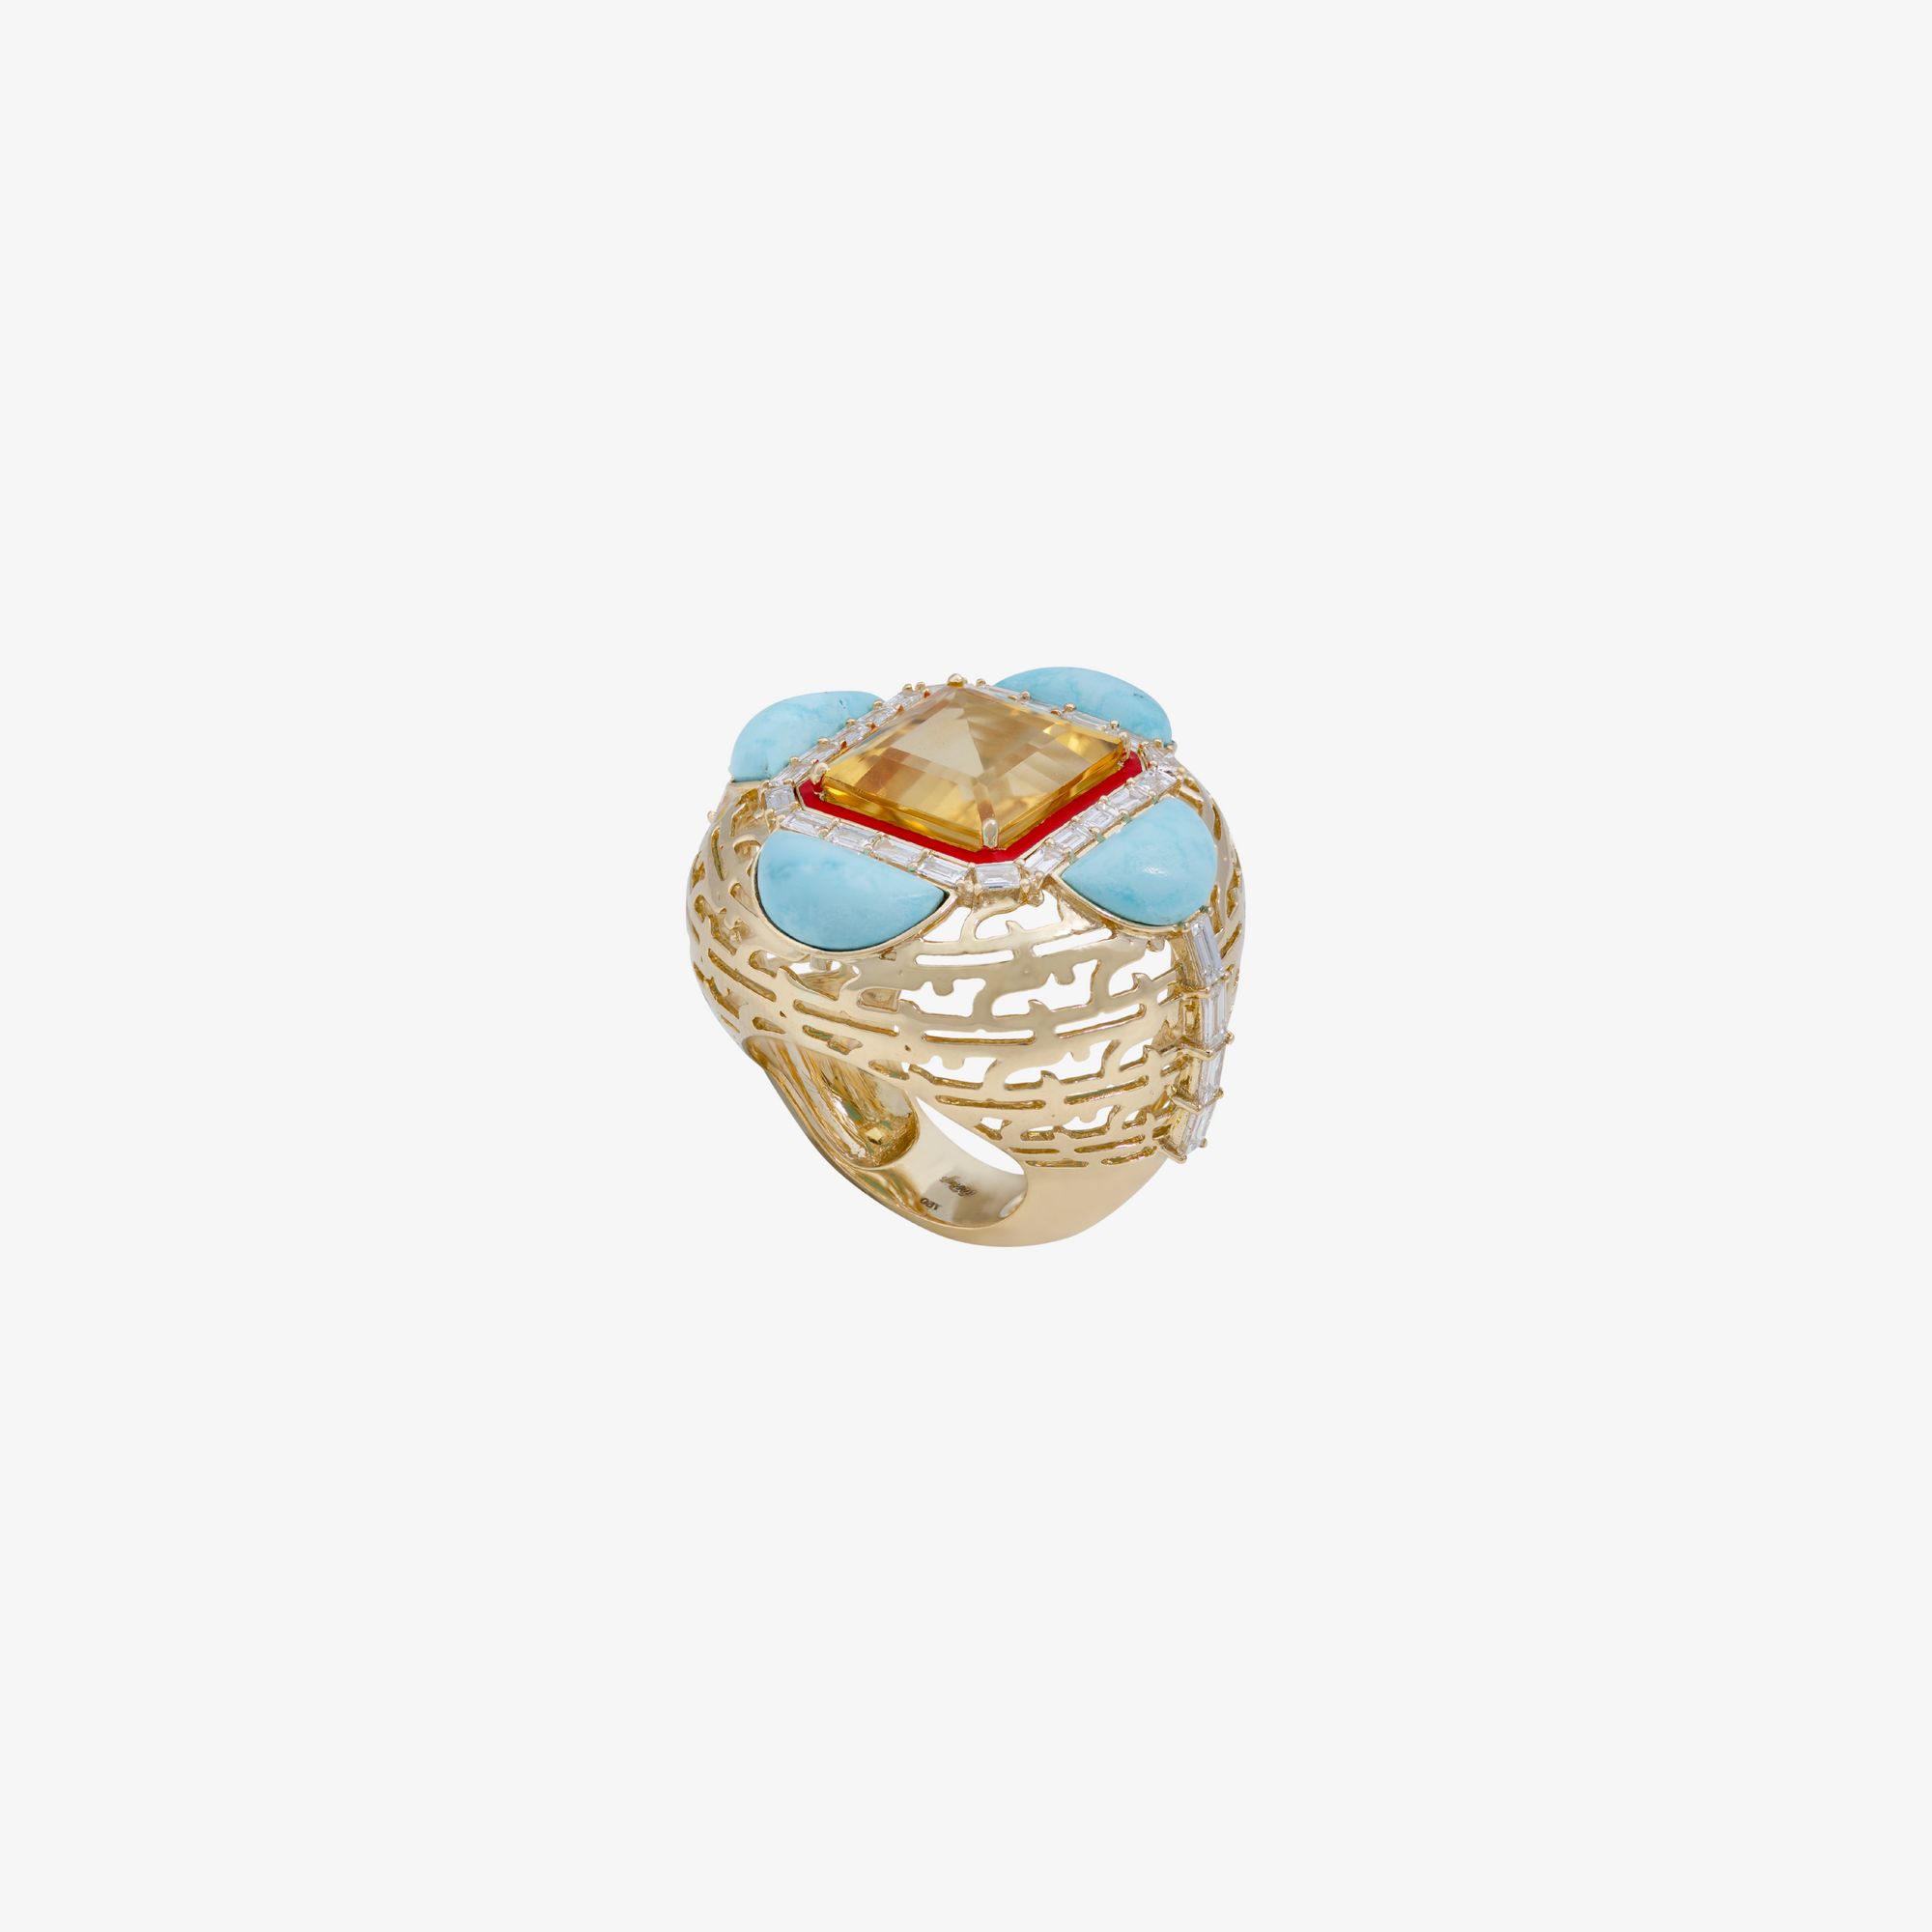 HAWA - Gold, Citrine & Turquoise Baguette Diamond Ring